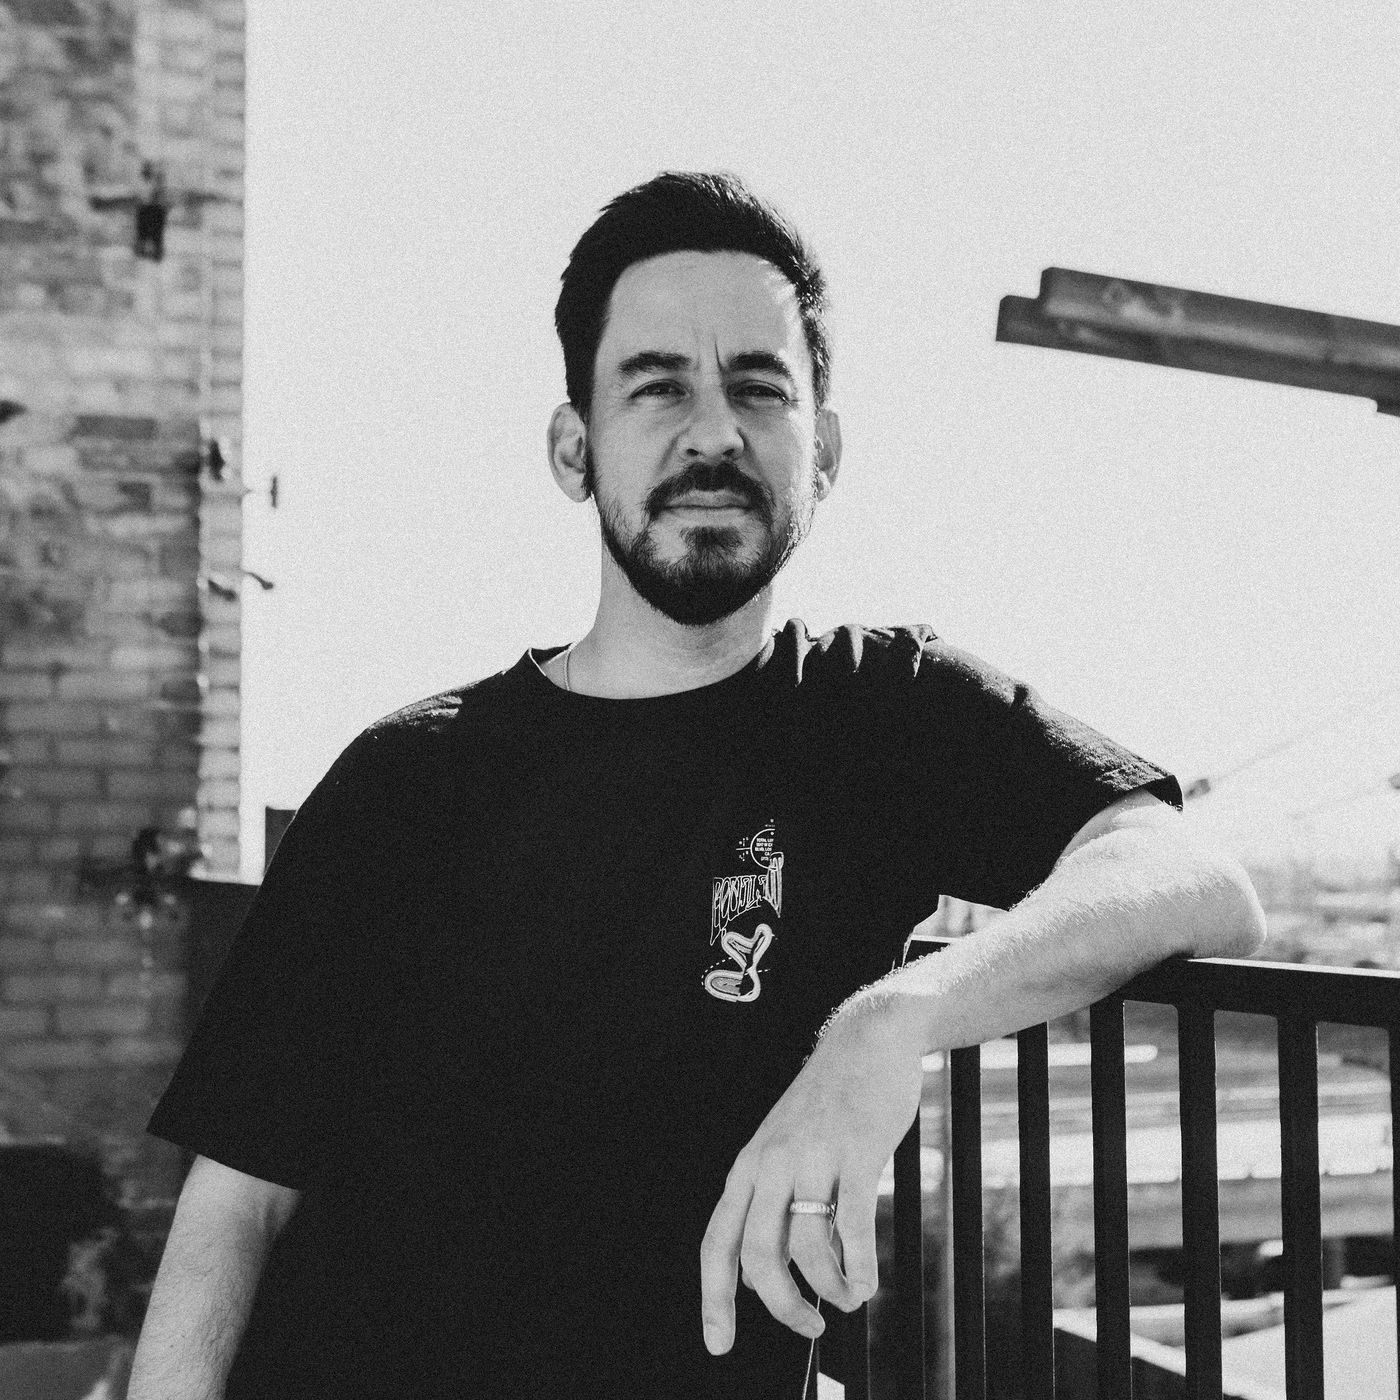 Mike Shinoda on Meteora, Chester Bennington, and Linkin Park pic